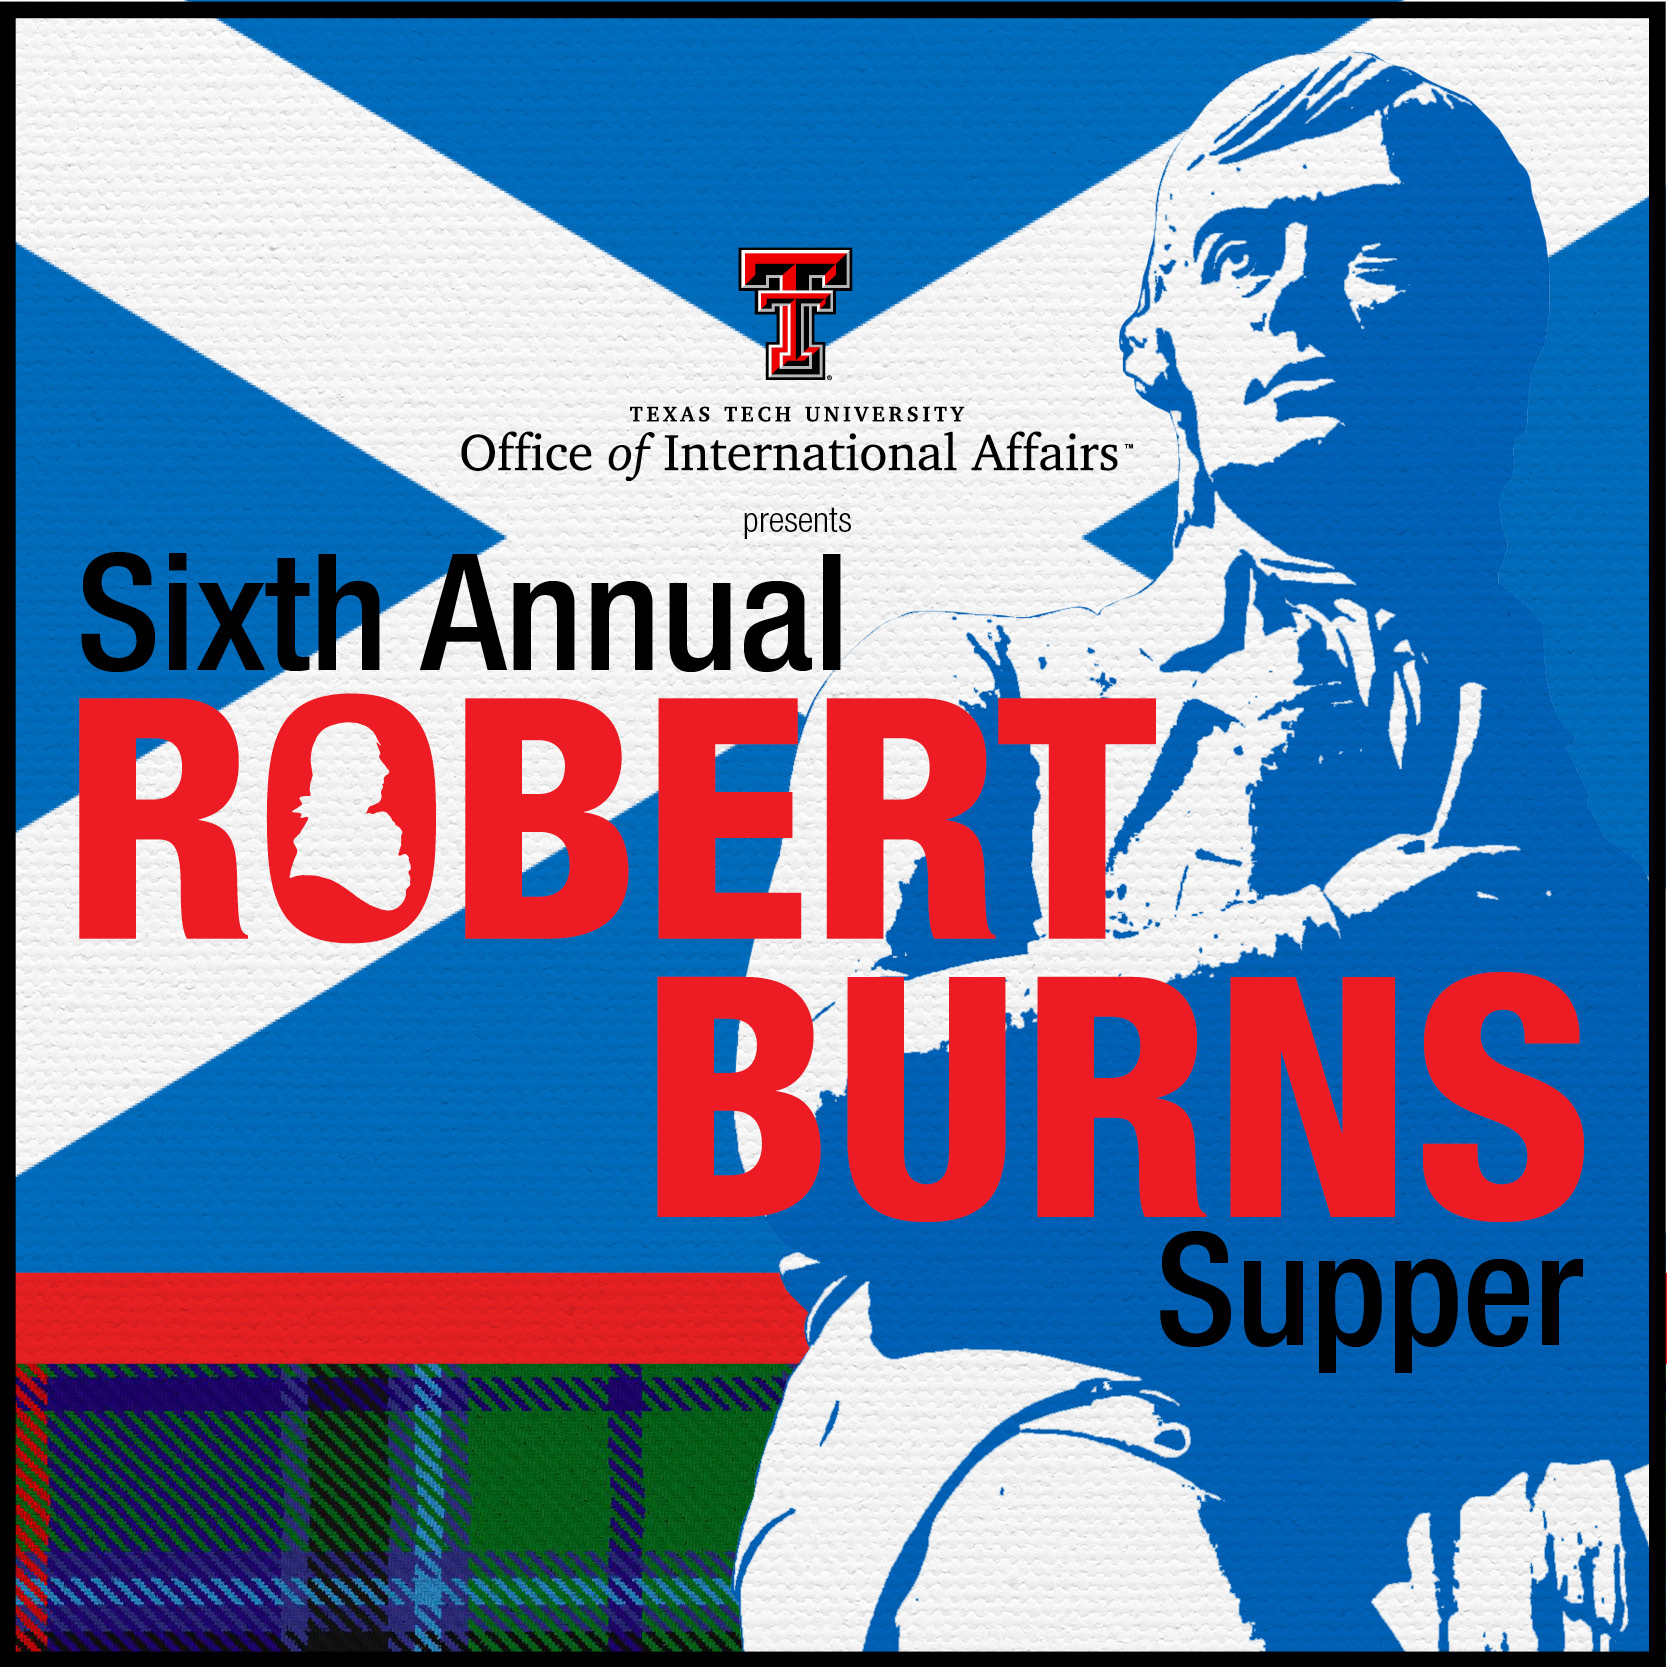 Sixth Annual Robert Burns Supper 2019